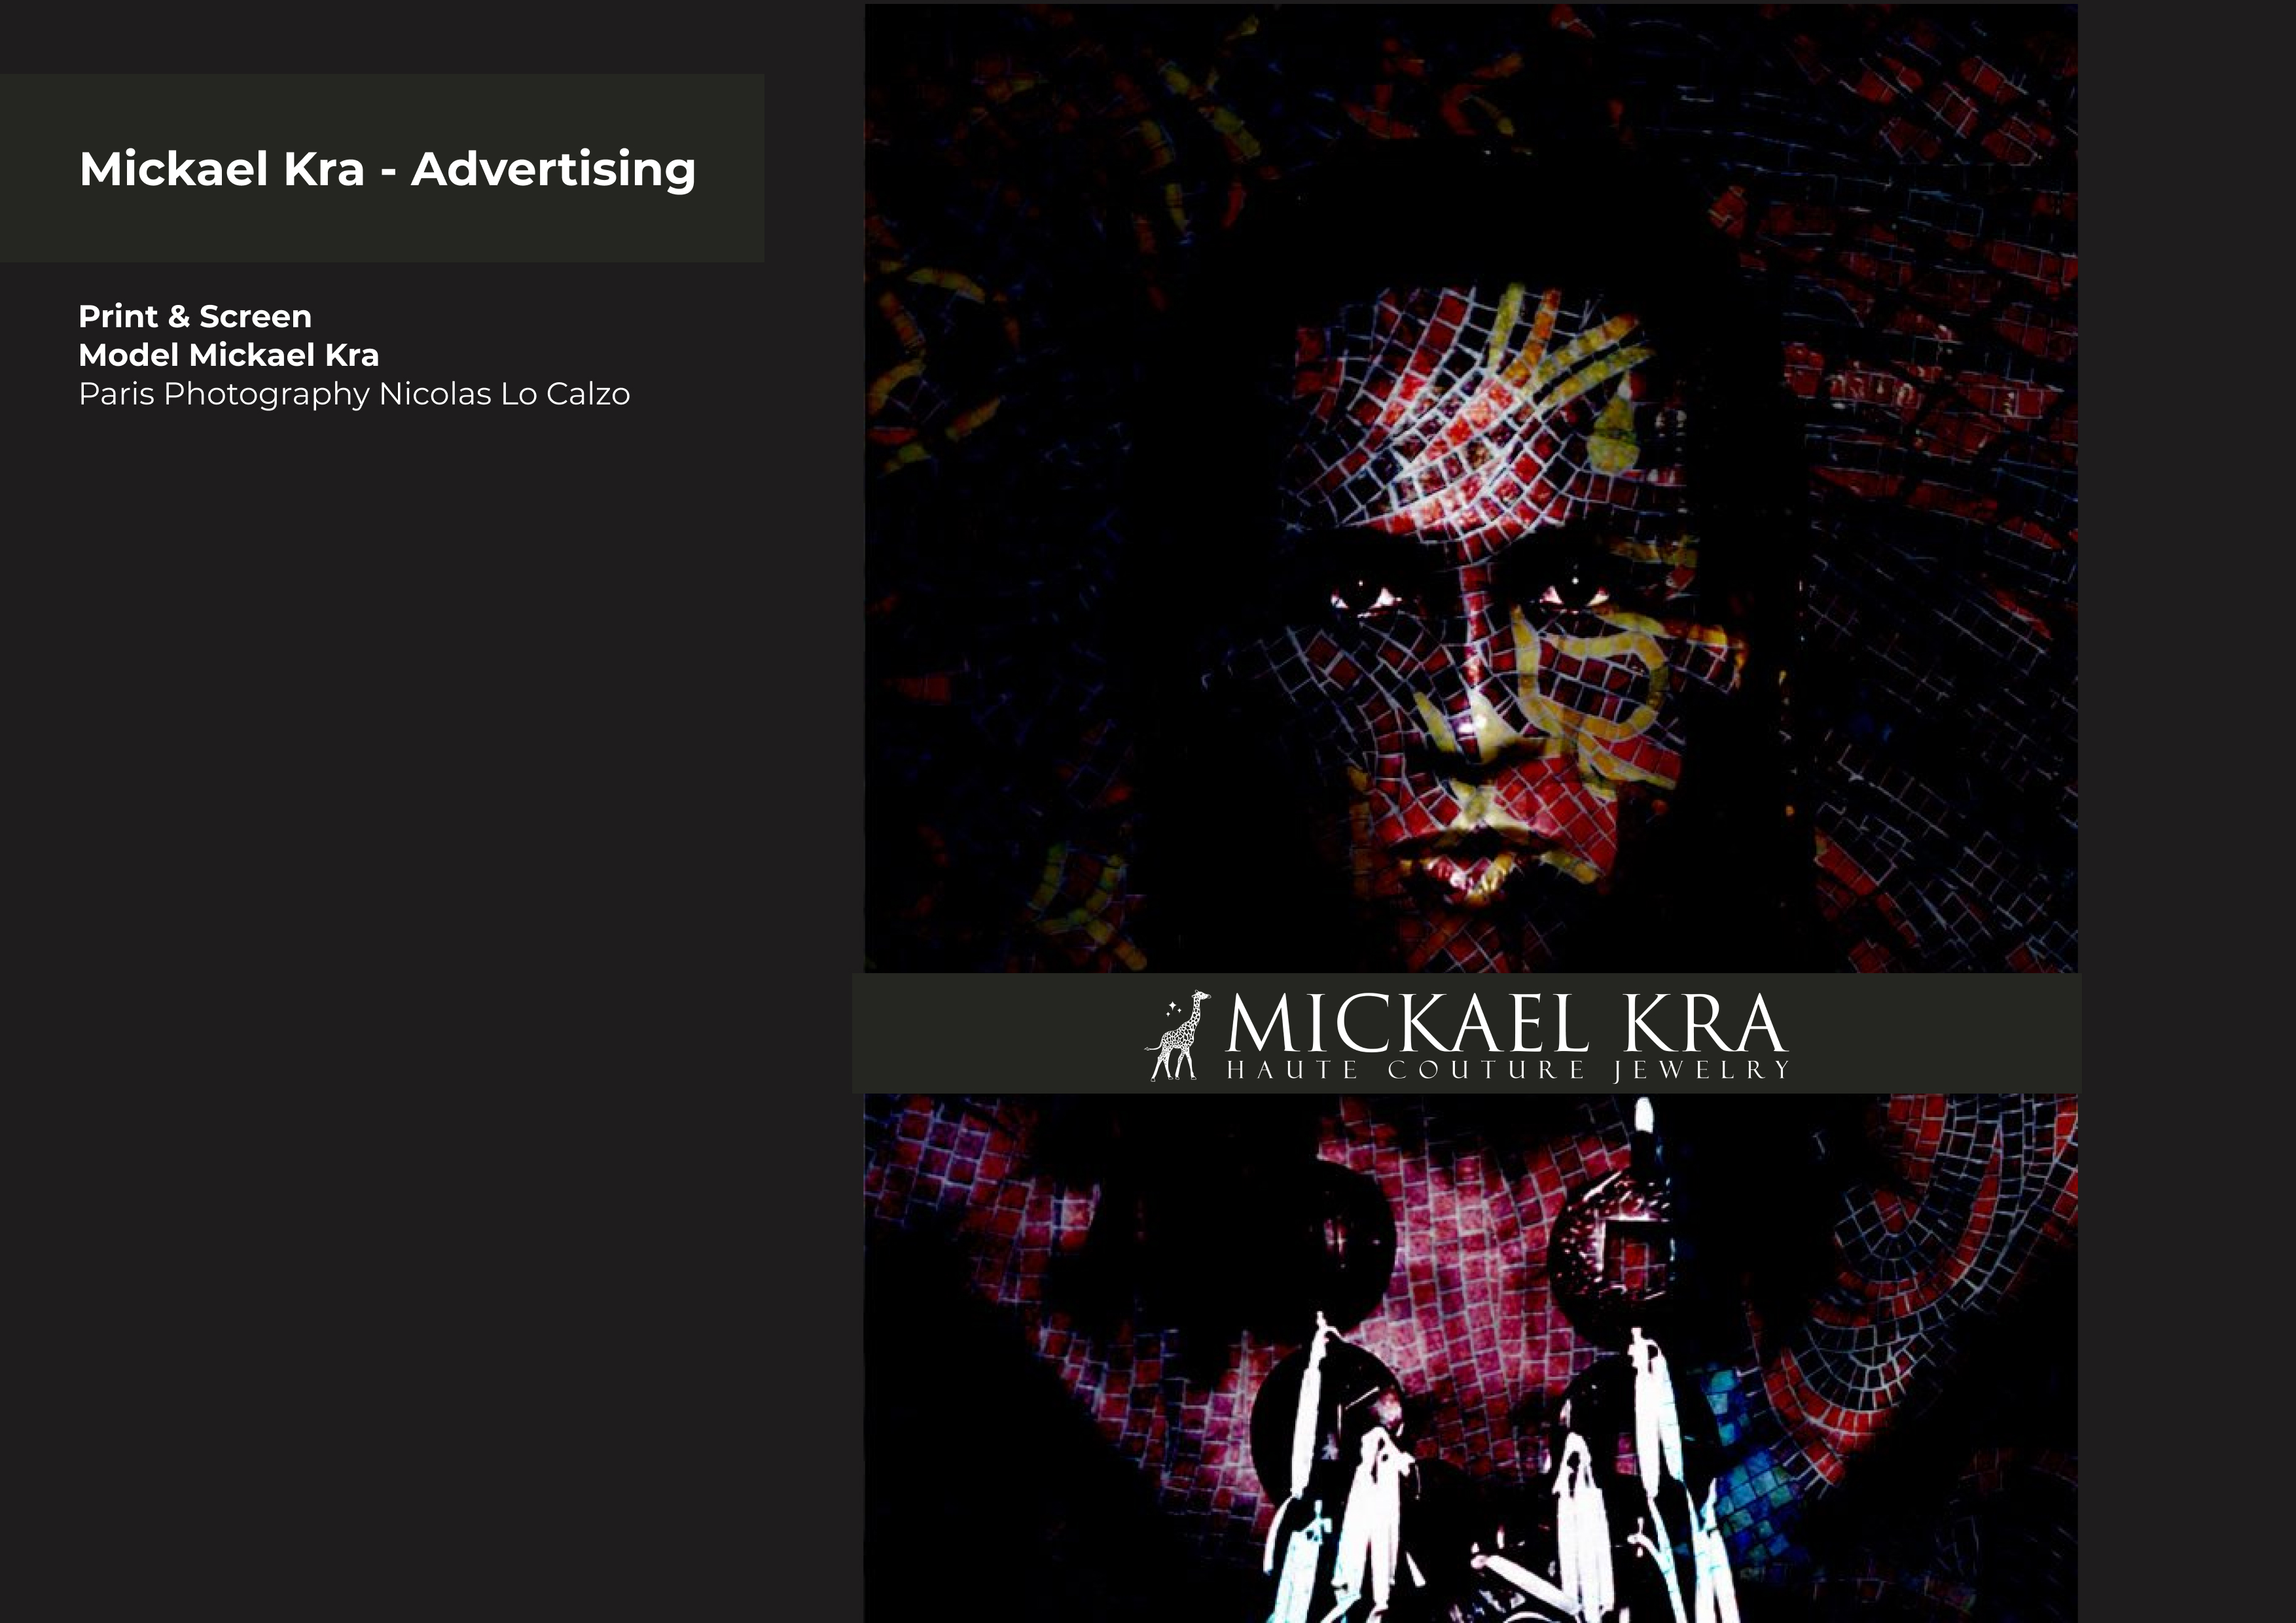 MK - Advertising campaign - Portait 1